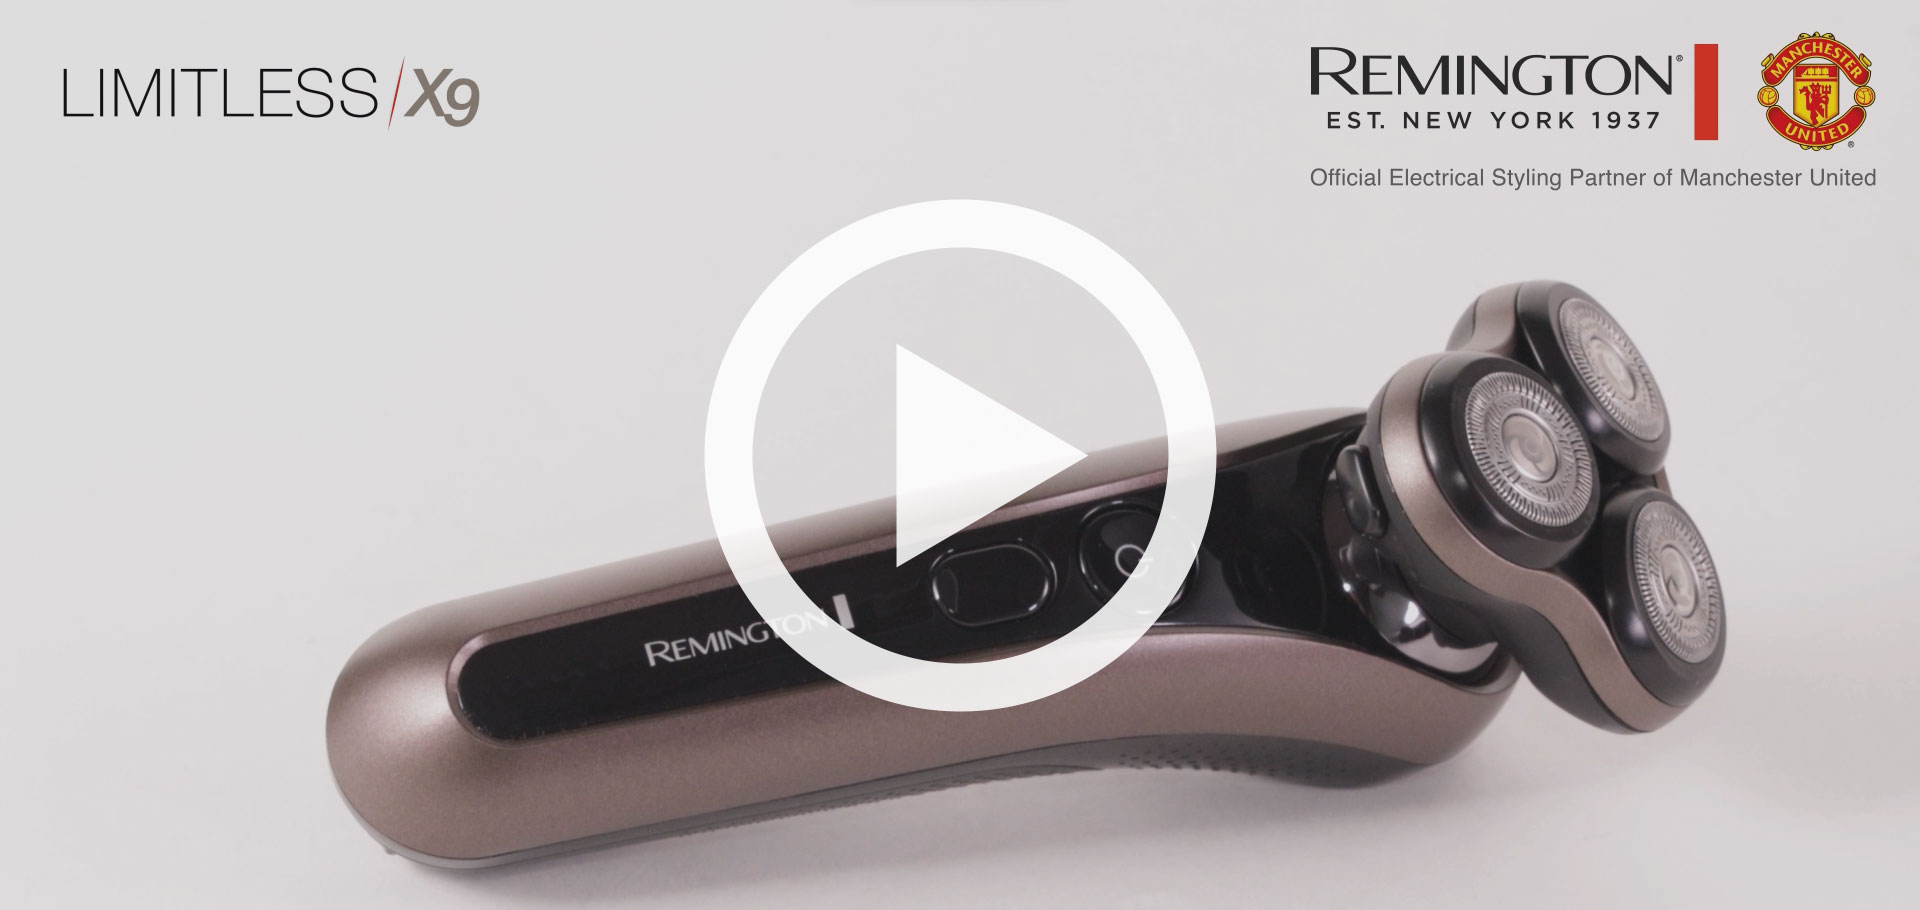 | | Remington X9 Rasur Remington Limitless Rotationsrasierer |